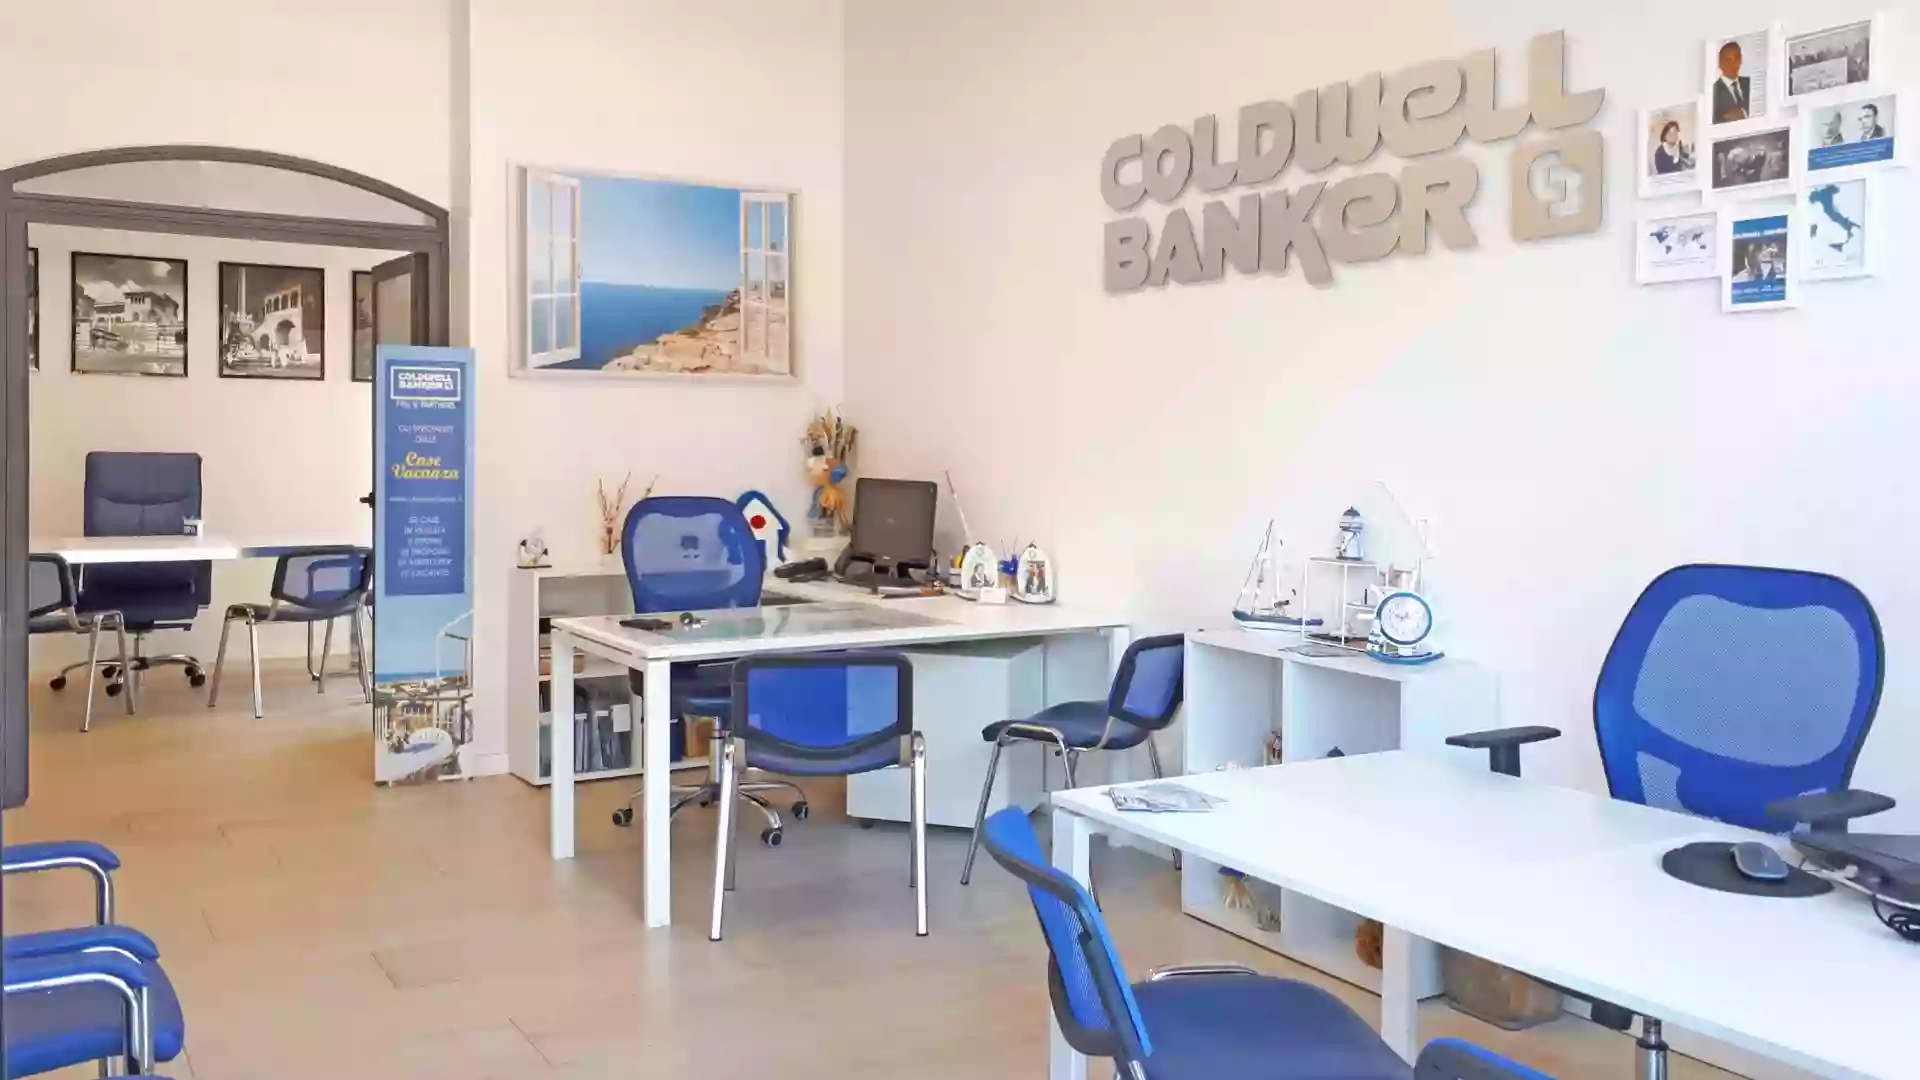 Coldwell Banker FRG & Partners - Lido di Tarquinia